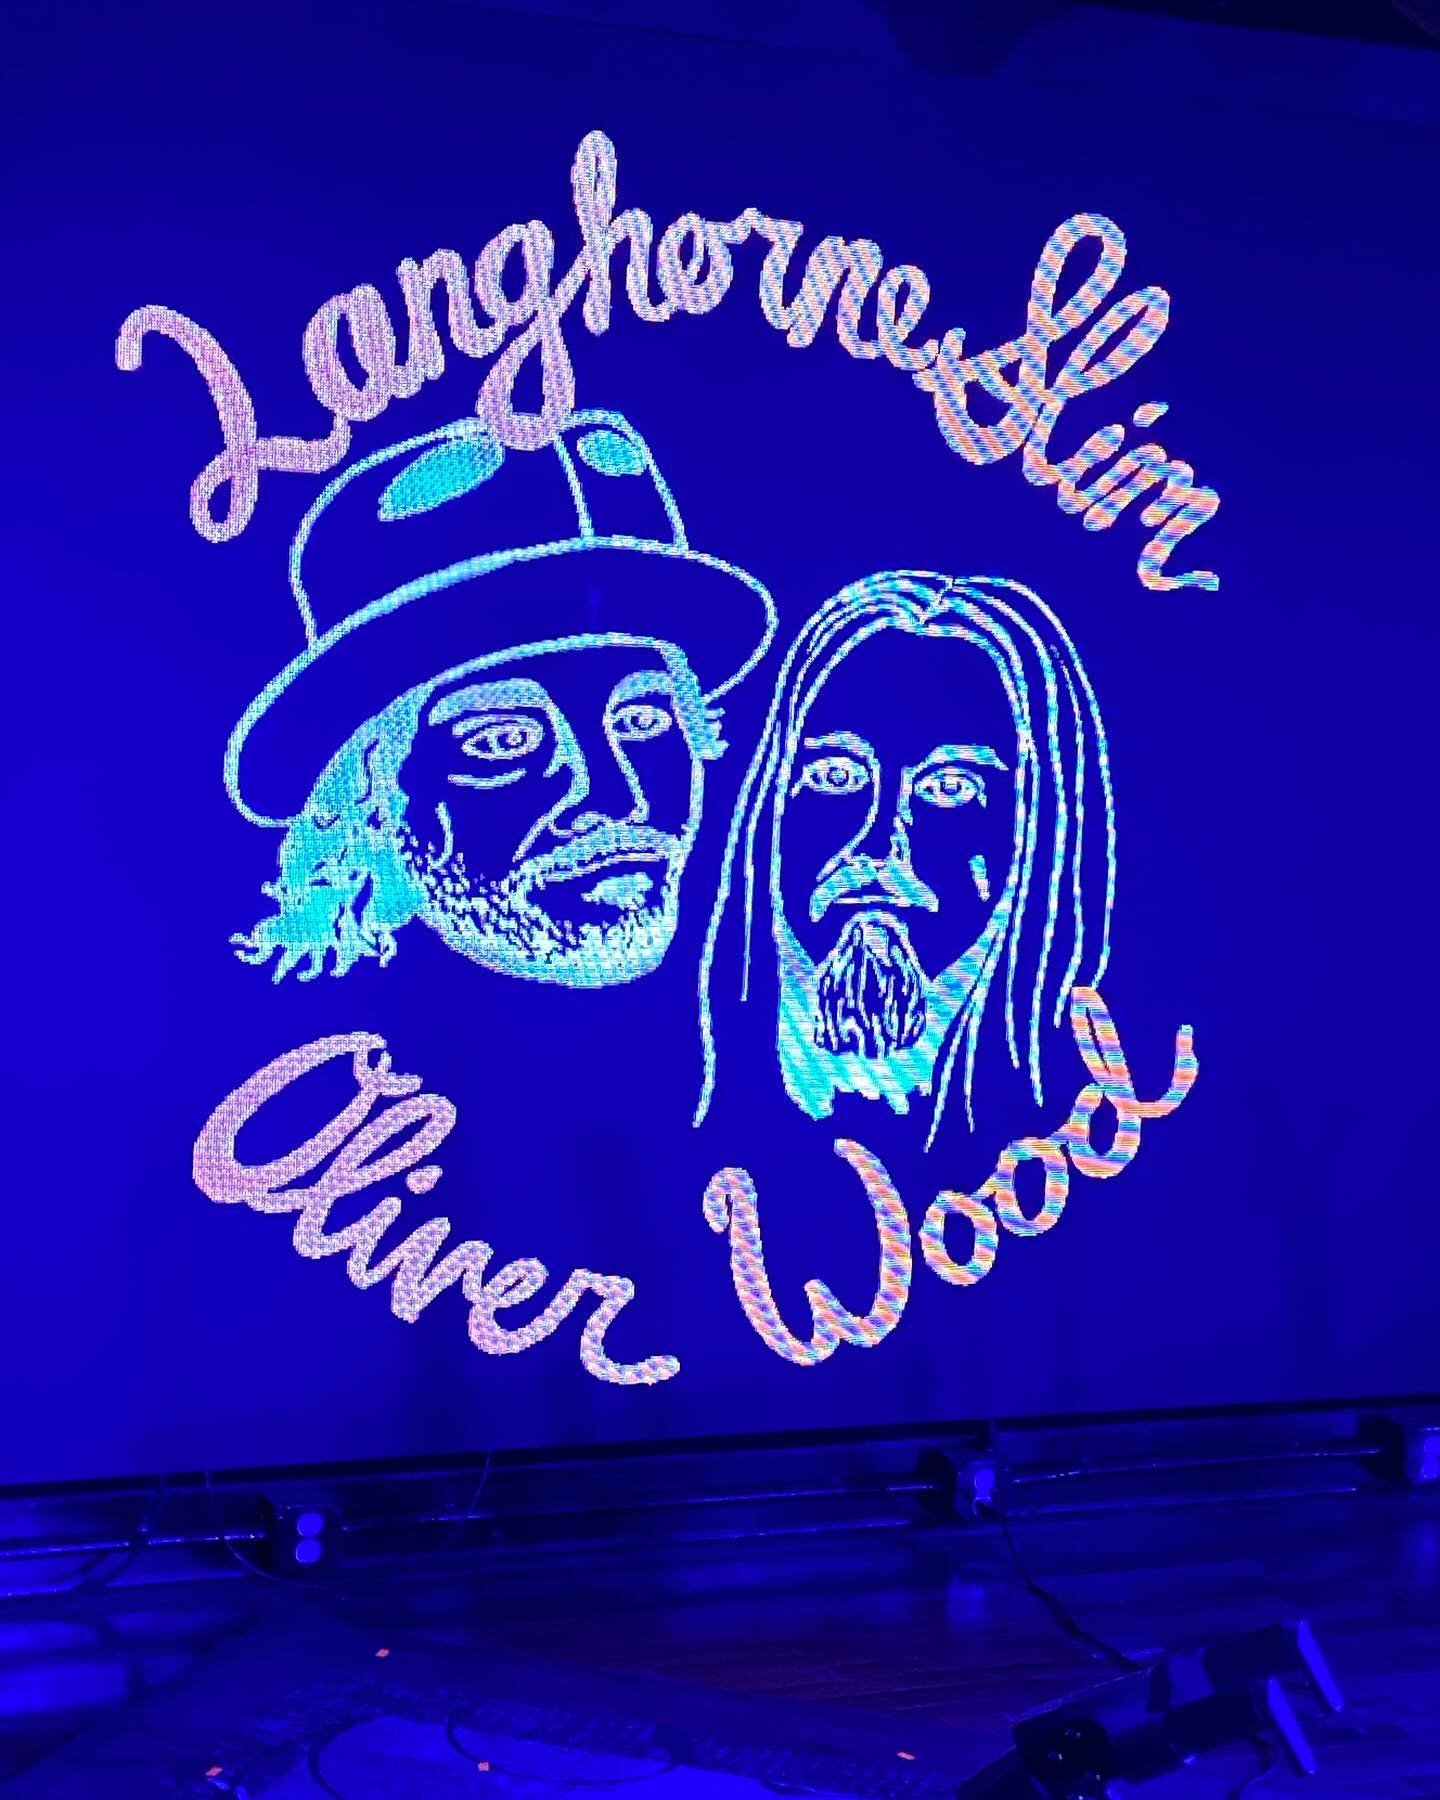 Tonight in Cinci at @ludlowgarage come on!
*
*
#langhorneslim #oliverwoodmusic #cincinattilivemusic